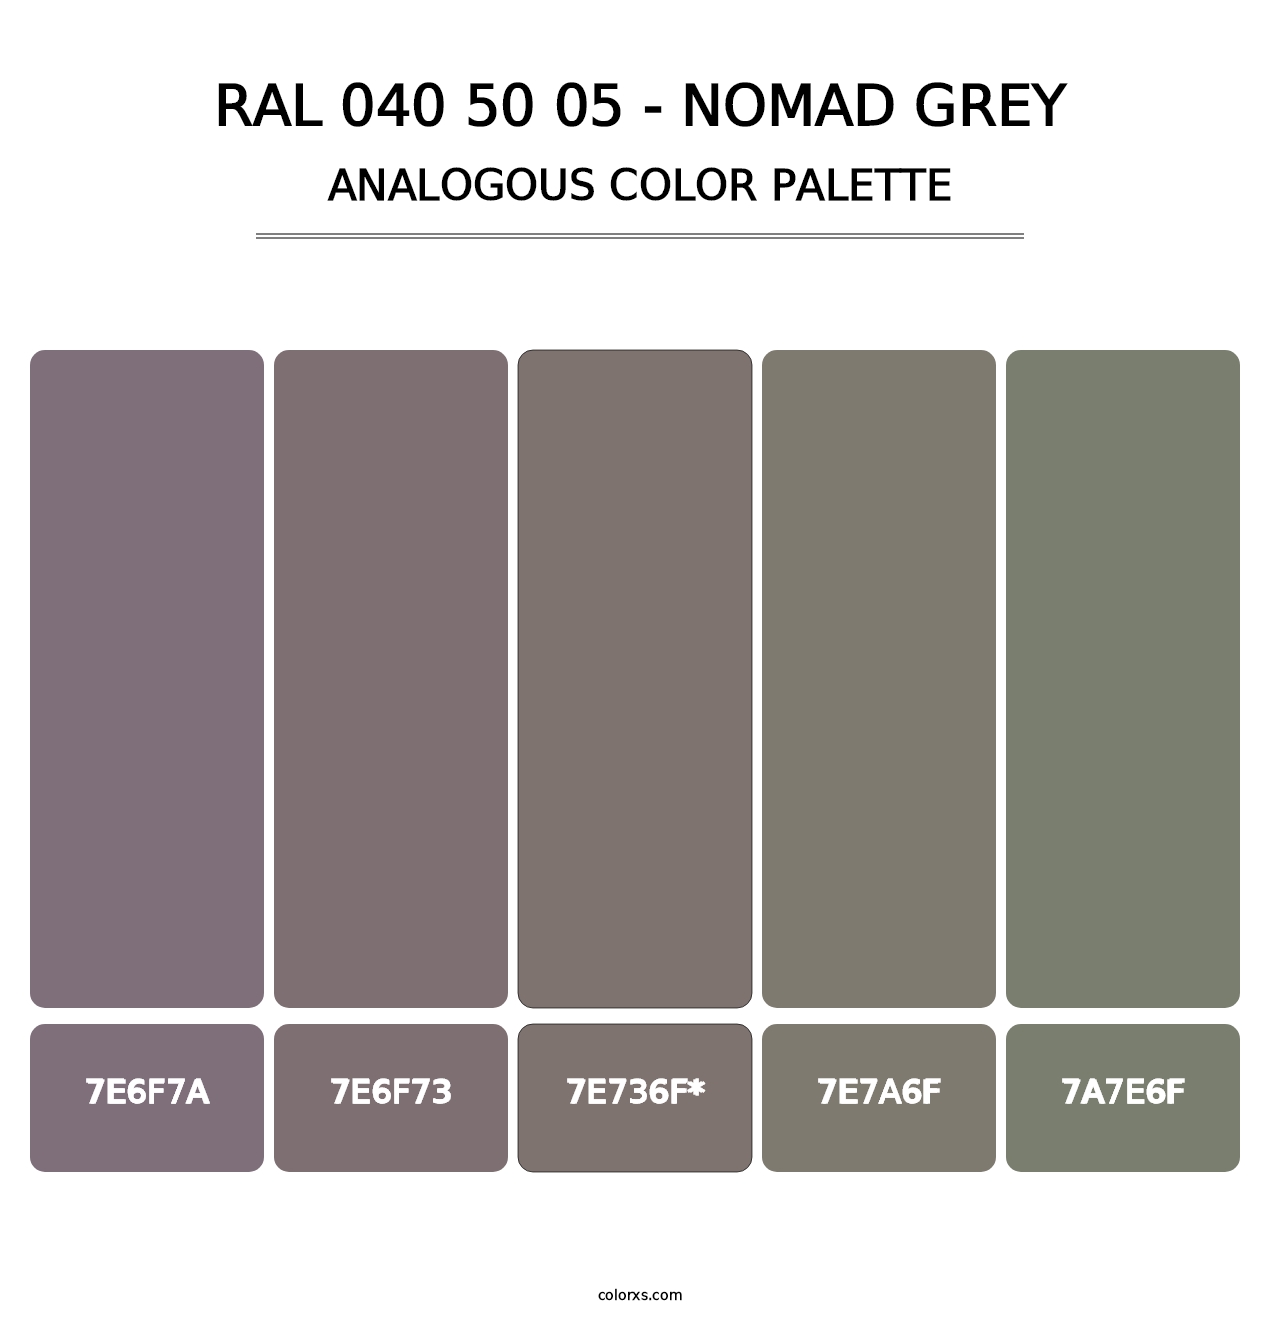 RAL 040 50 05 - Nomad Grey - Analogous Color Palette